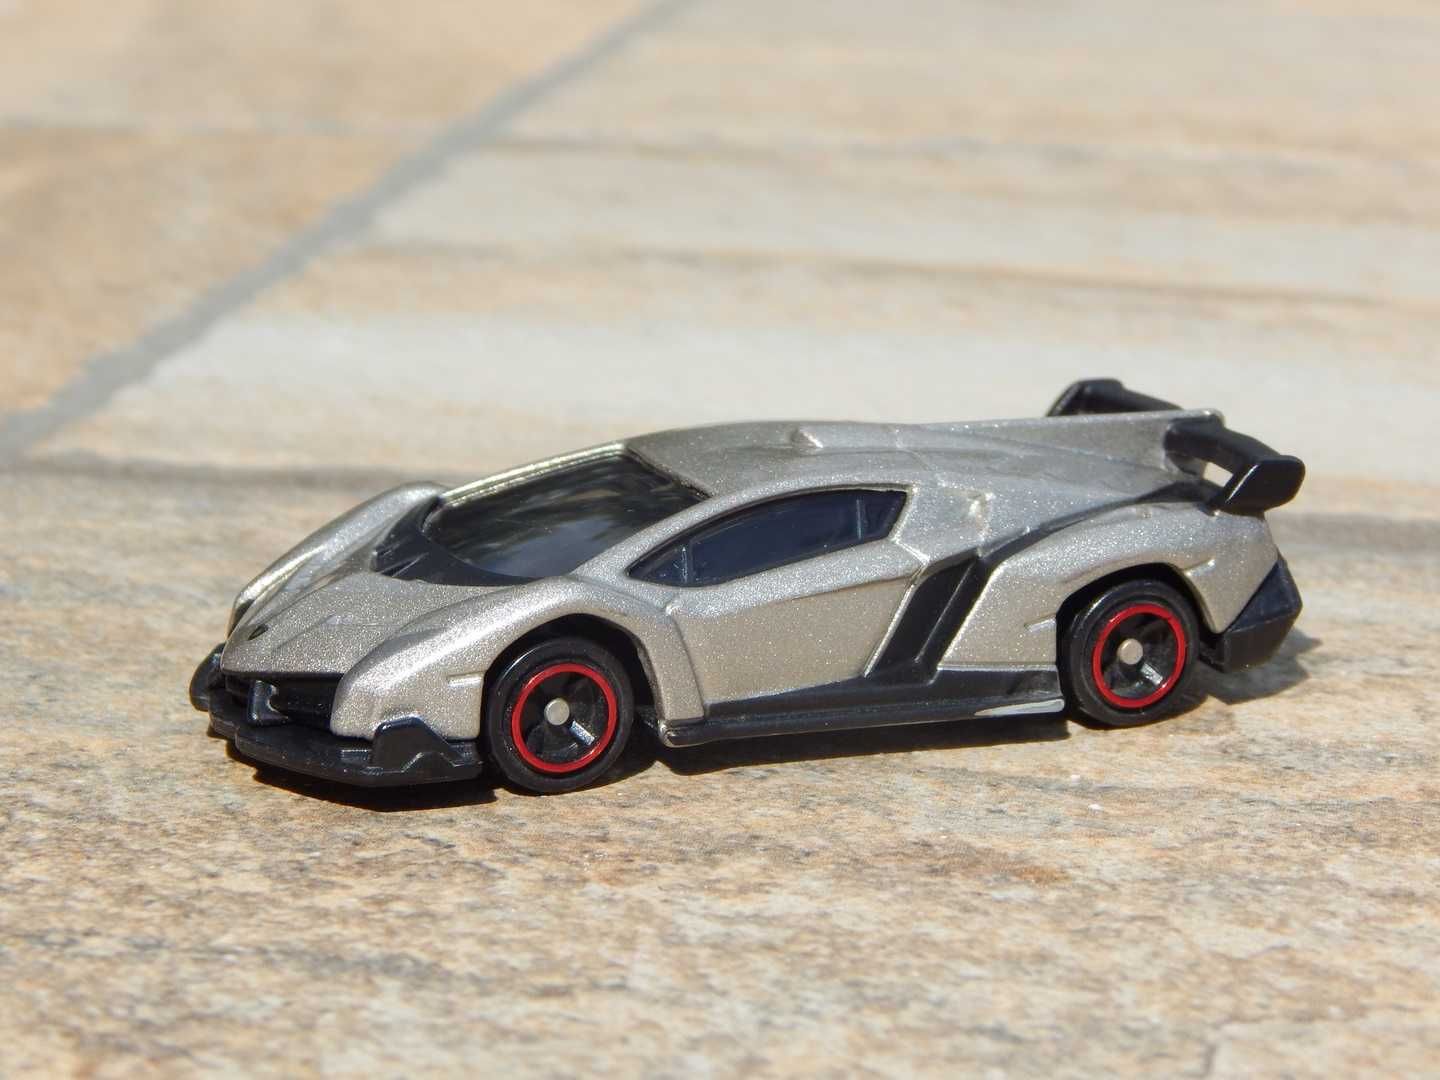 Macheta Lamborghini Veneno Tomica Takara scara 1:67 + ambalaj